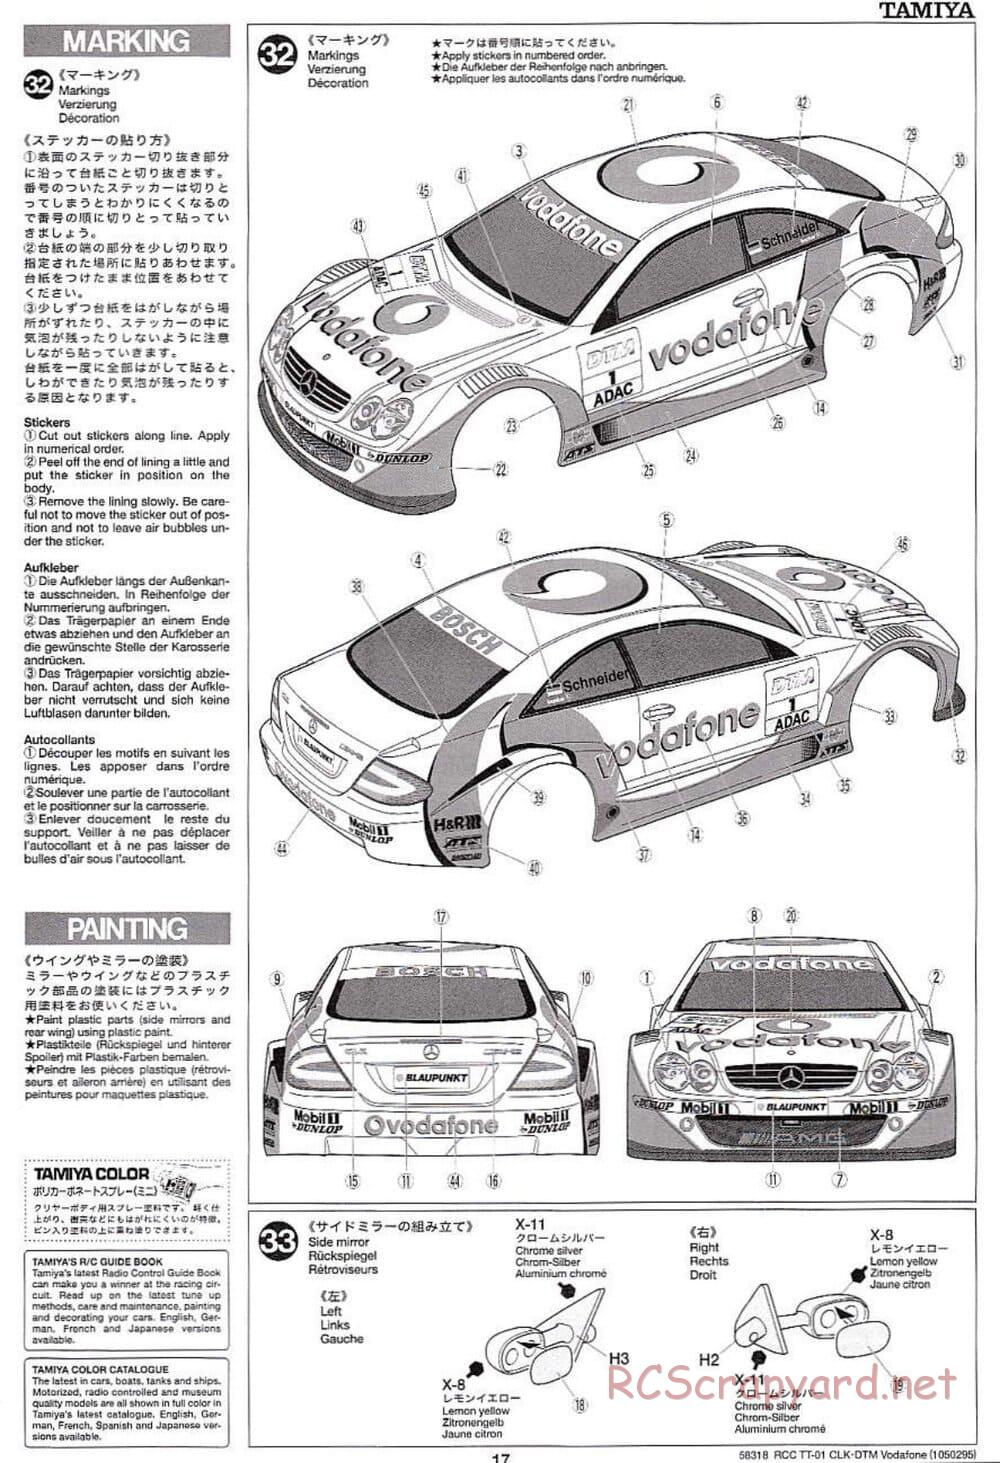 Tamiya - Mercedes-Benz CLK-DTM Team Vodafone AMG-Mercedes - TT-01 Chassis - Manual - Page 17